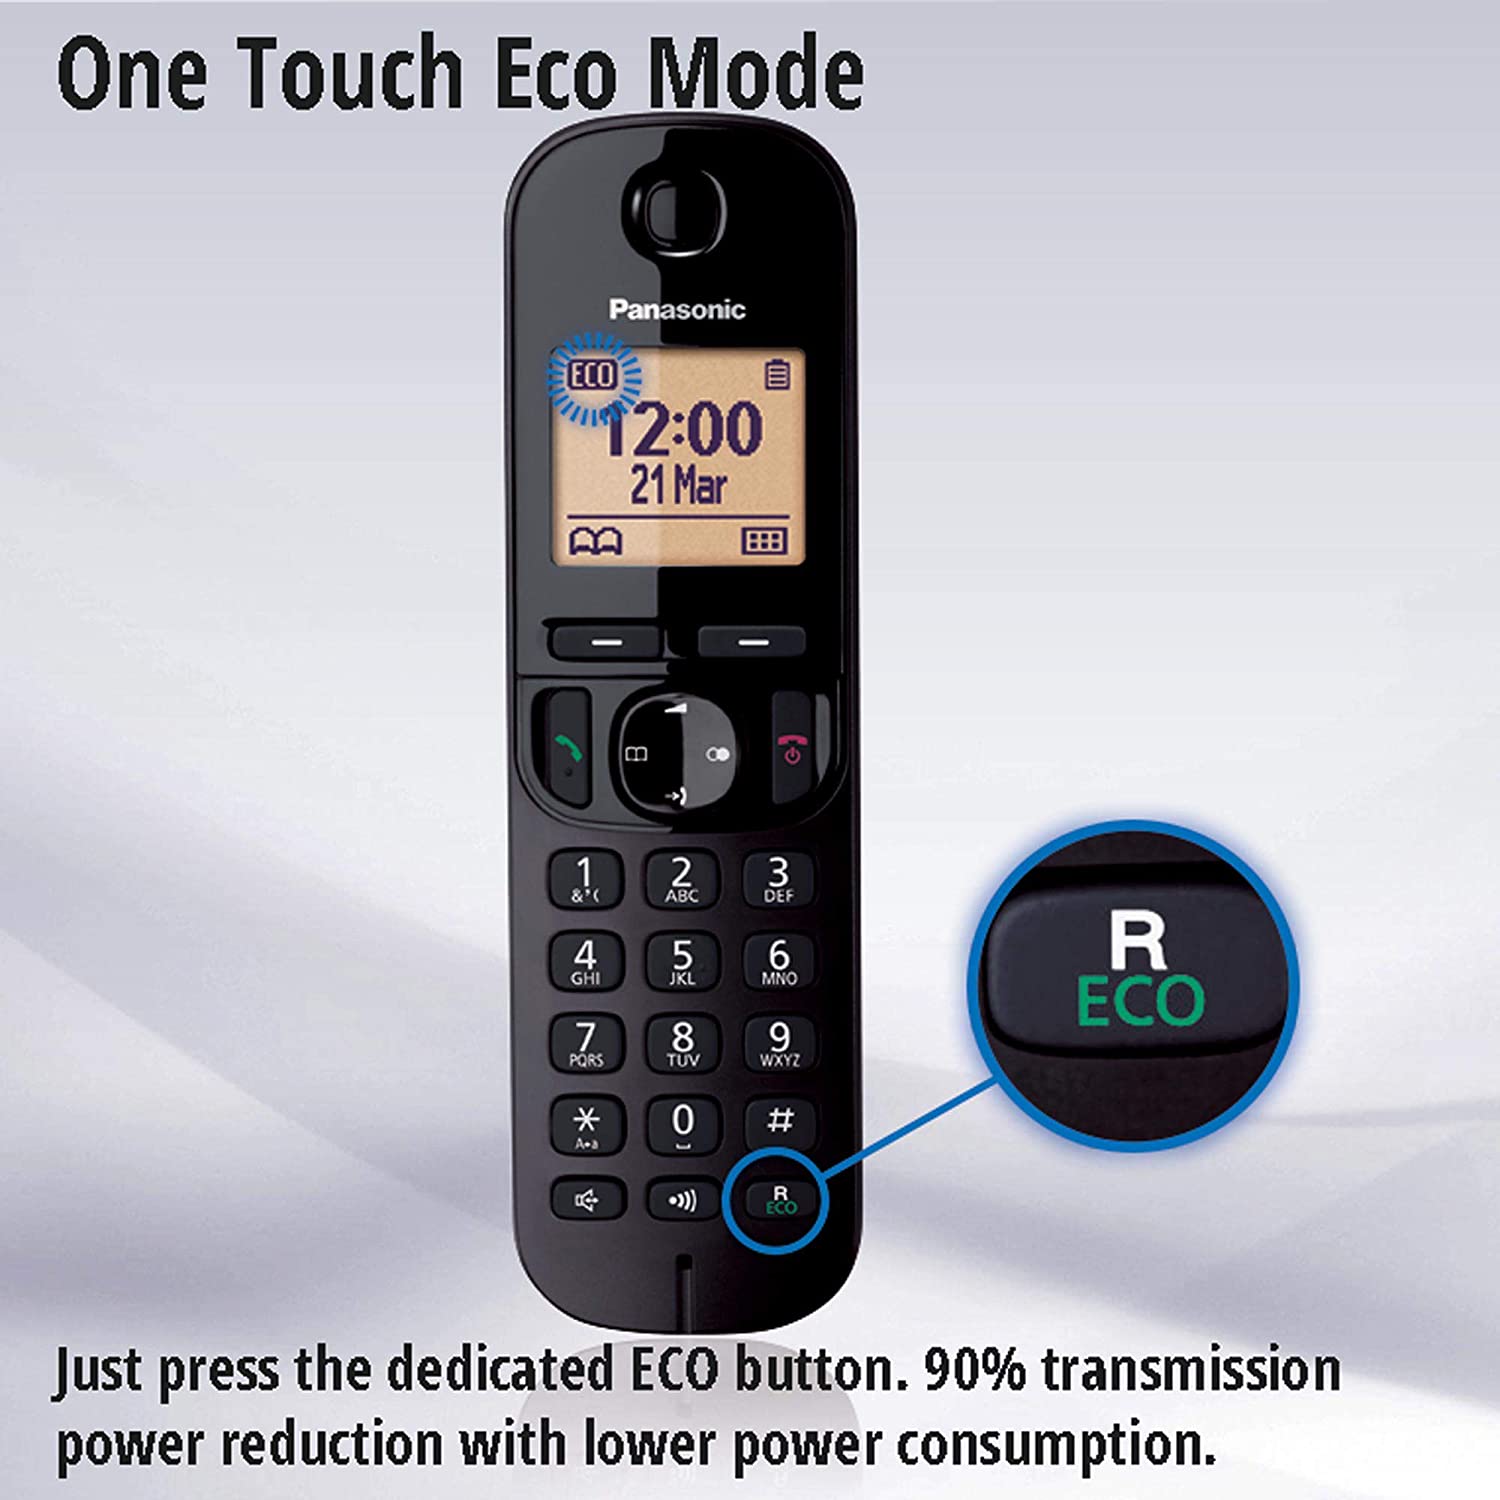 Panasonic KX-TGC223EB DECT Cordless Phone with Answering Machine - Trio - Refurbished Pristine